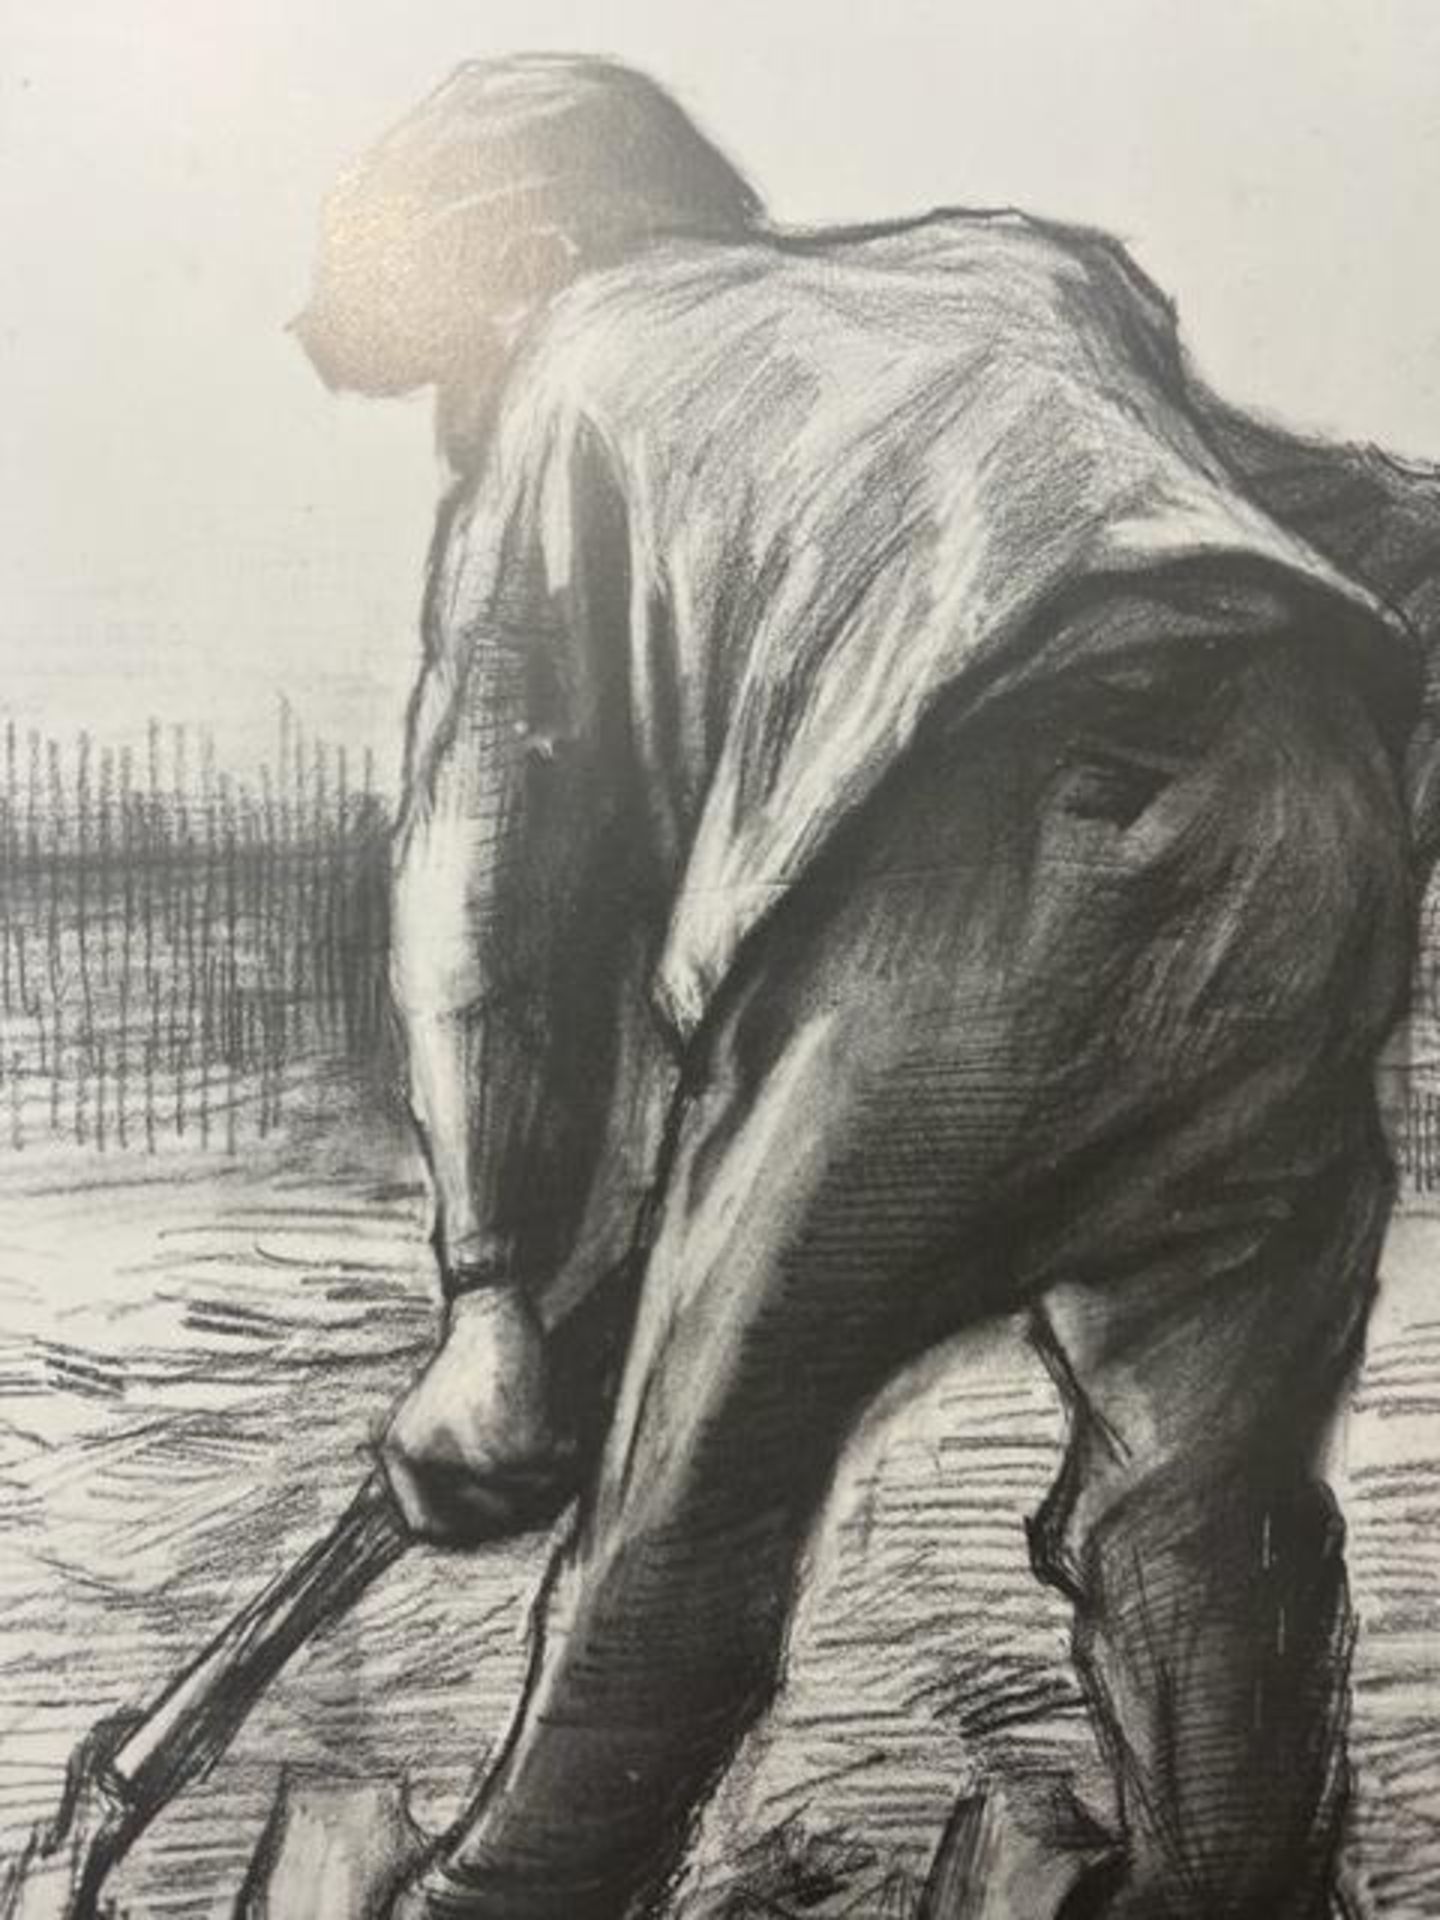 Vincent van Gogh "Peasant Digging" Print. - Bild 3 aus 6